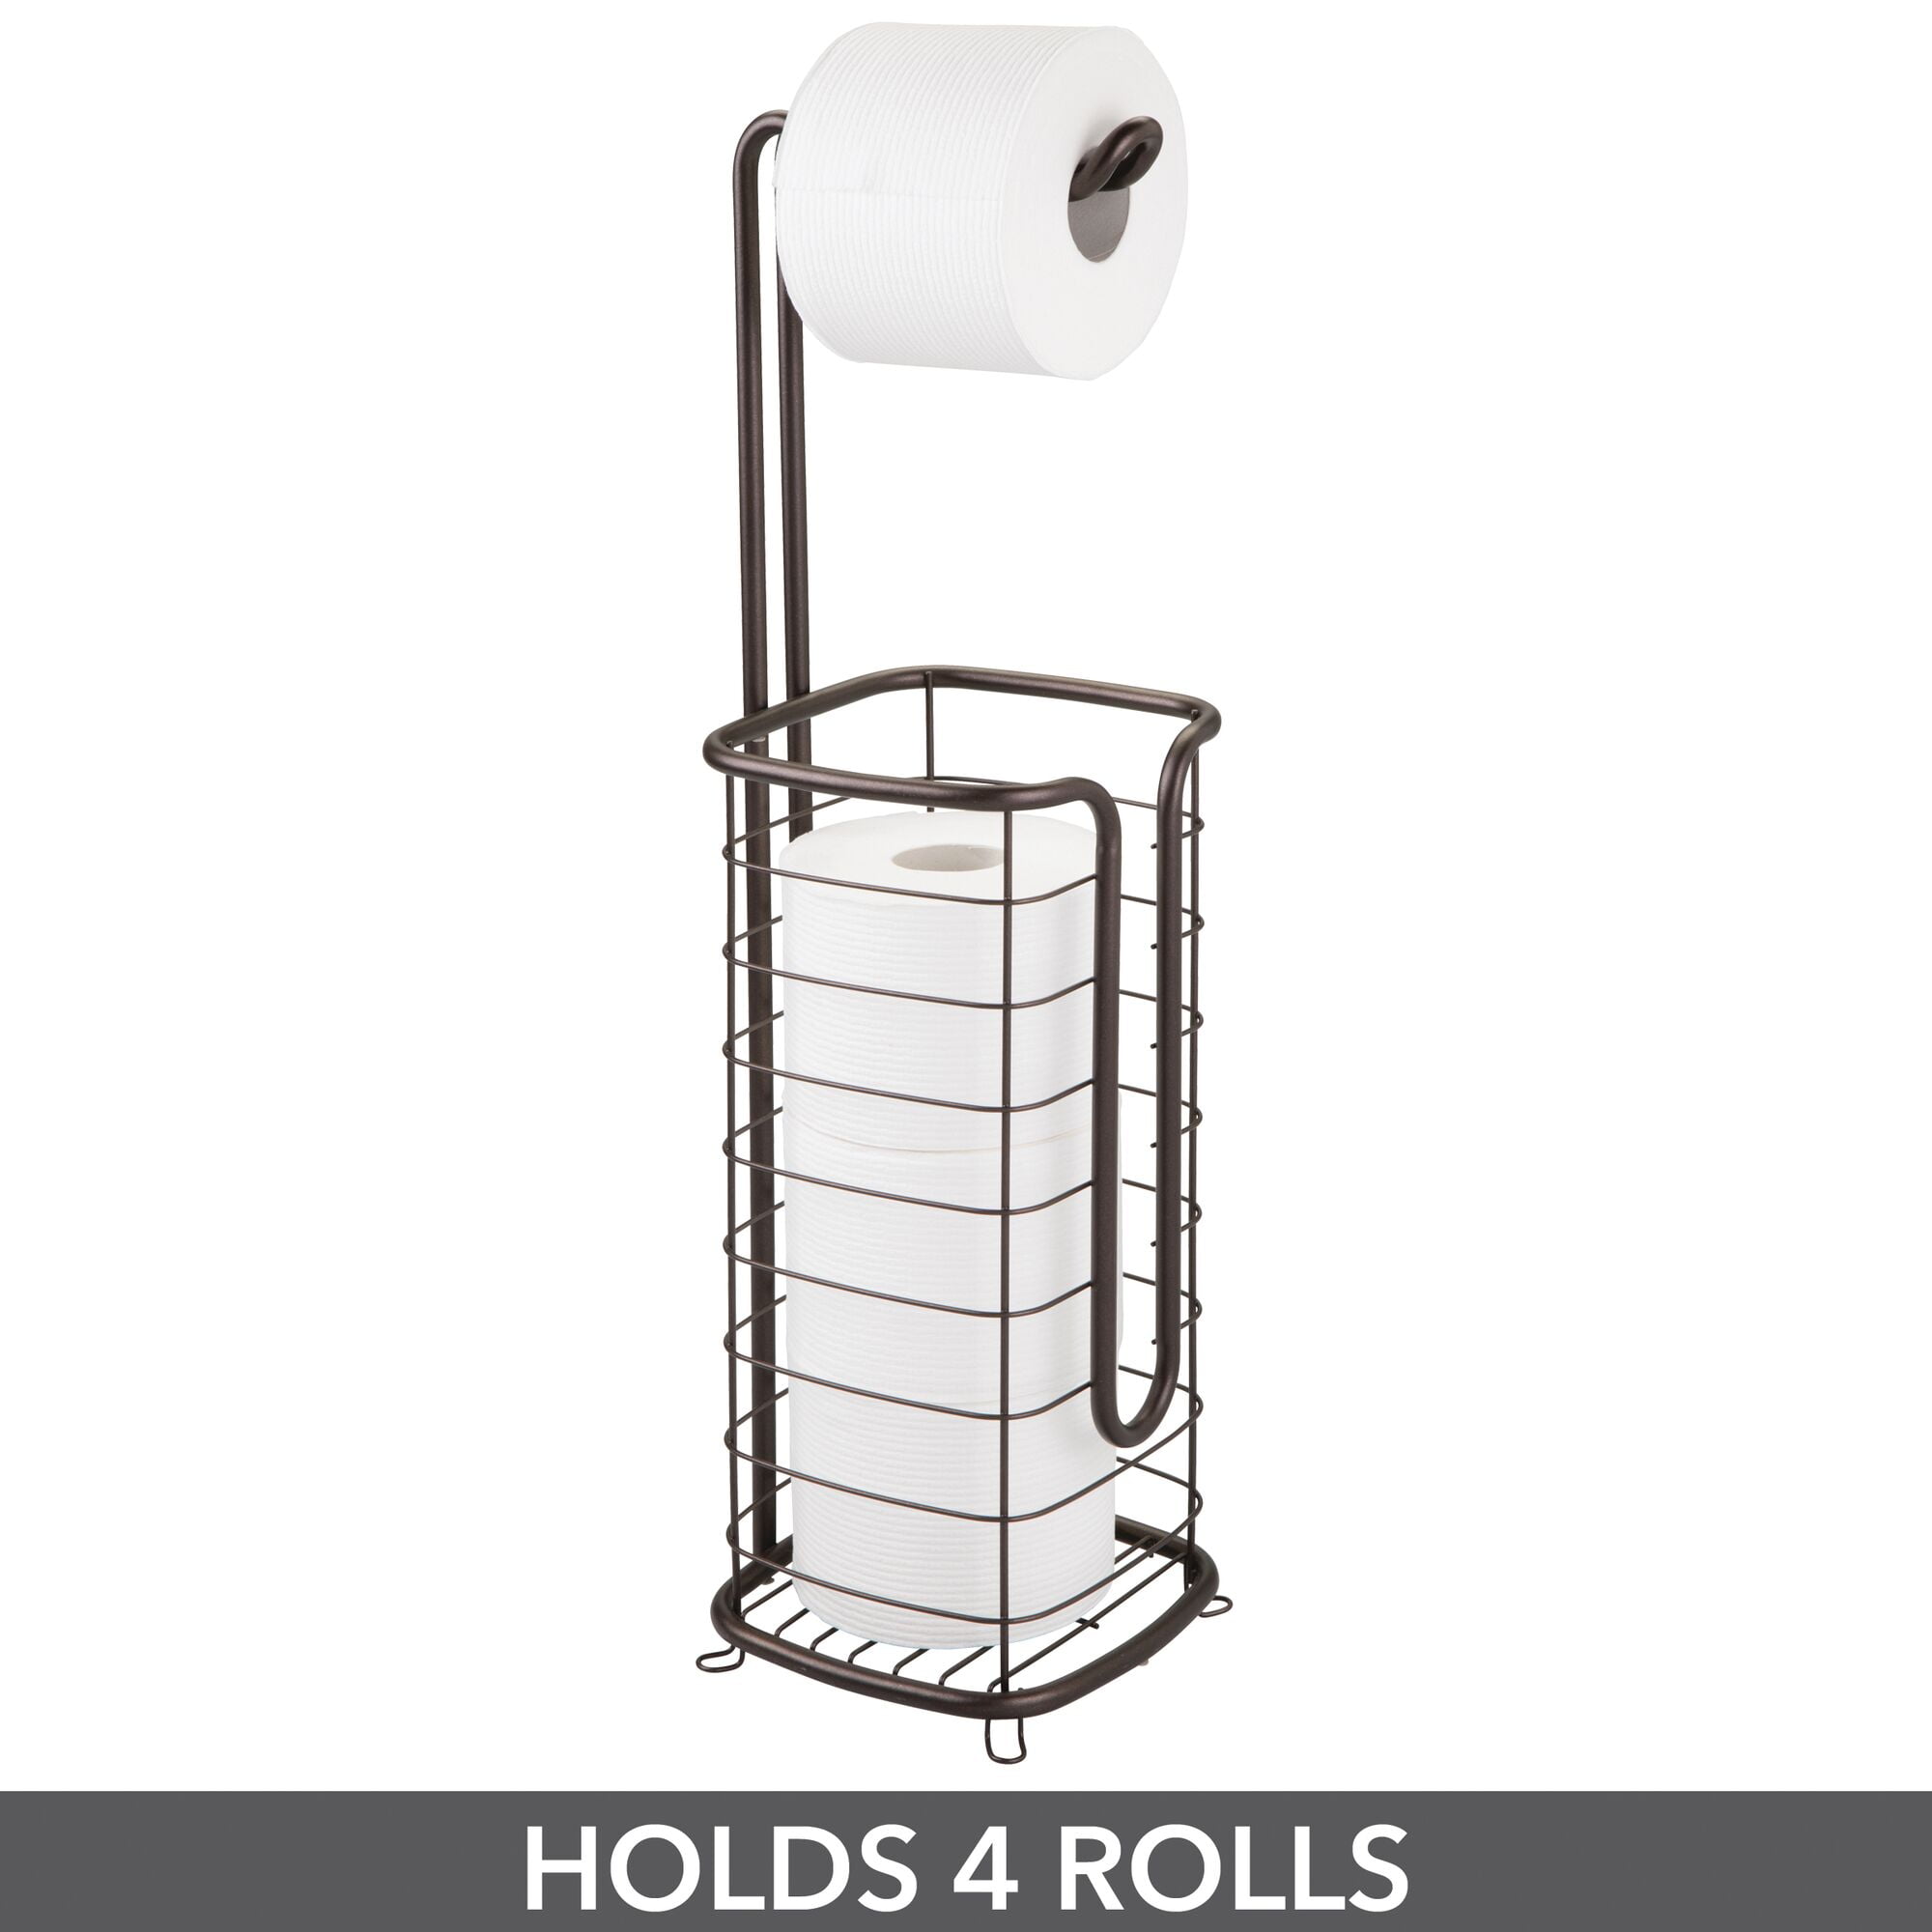 mDesign Steel Freestanding Toilet Paper Holder Stand and Dispenser